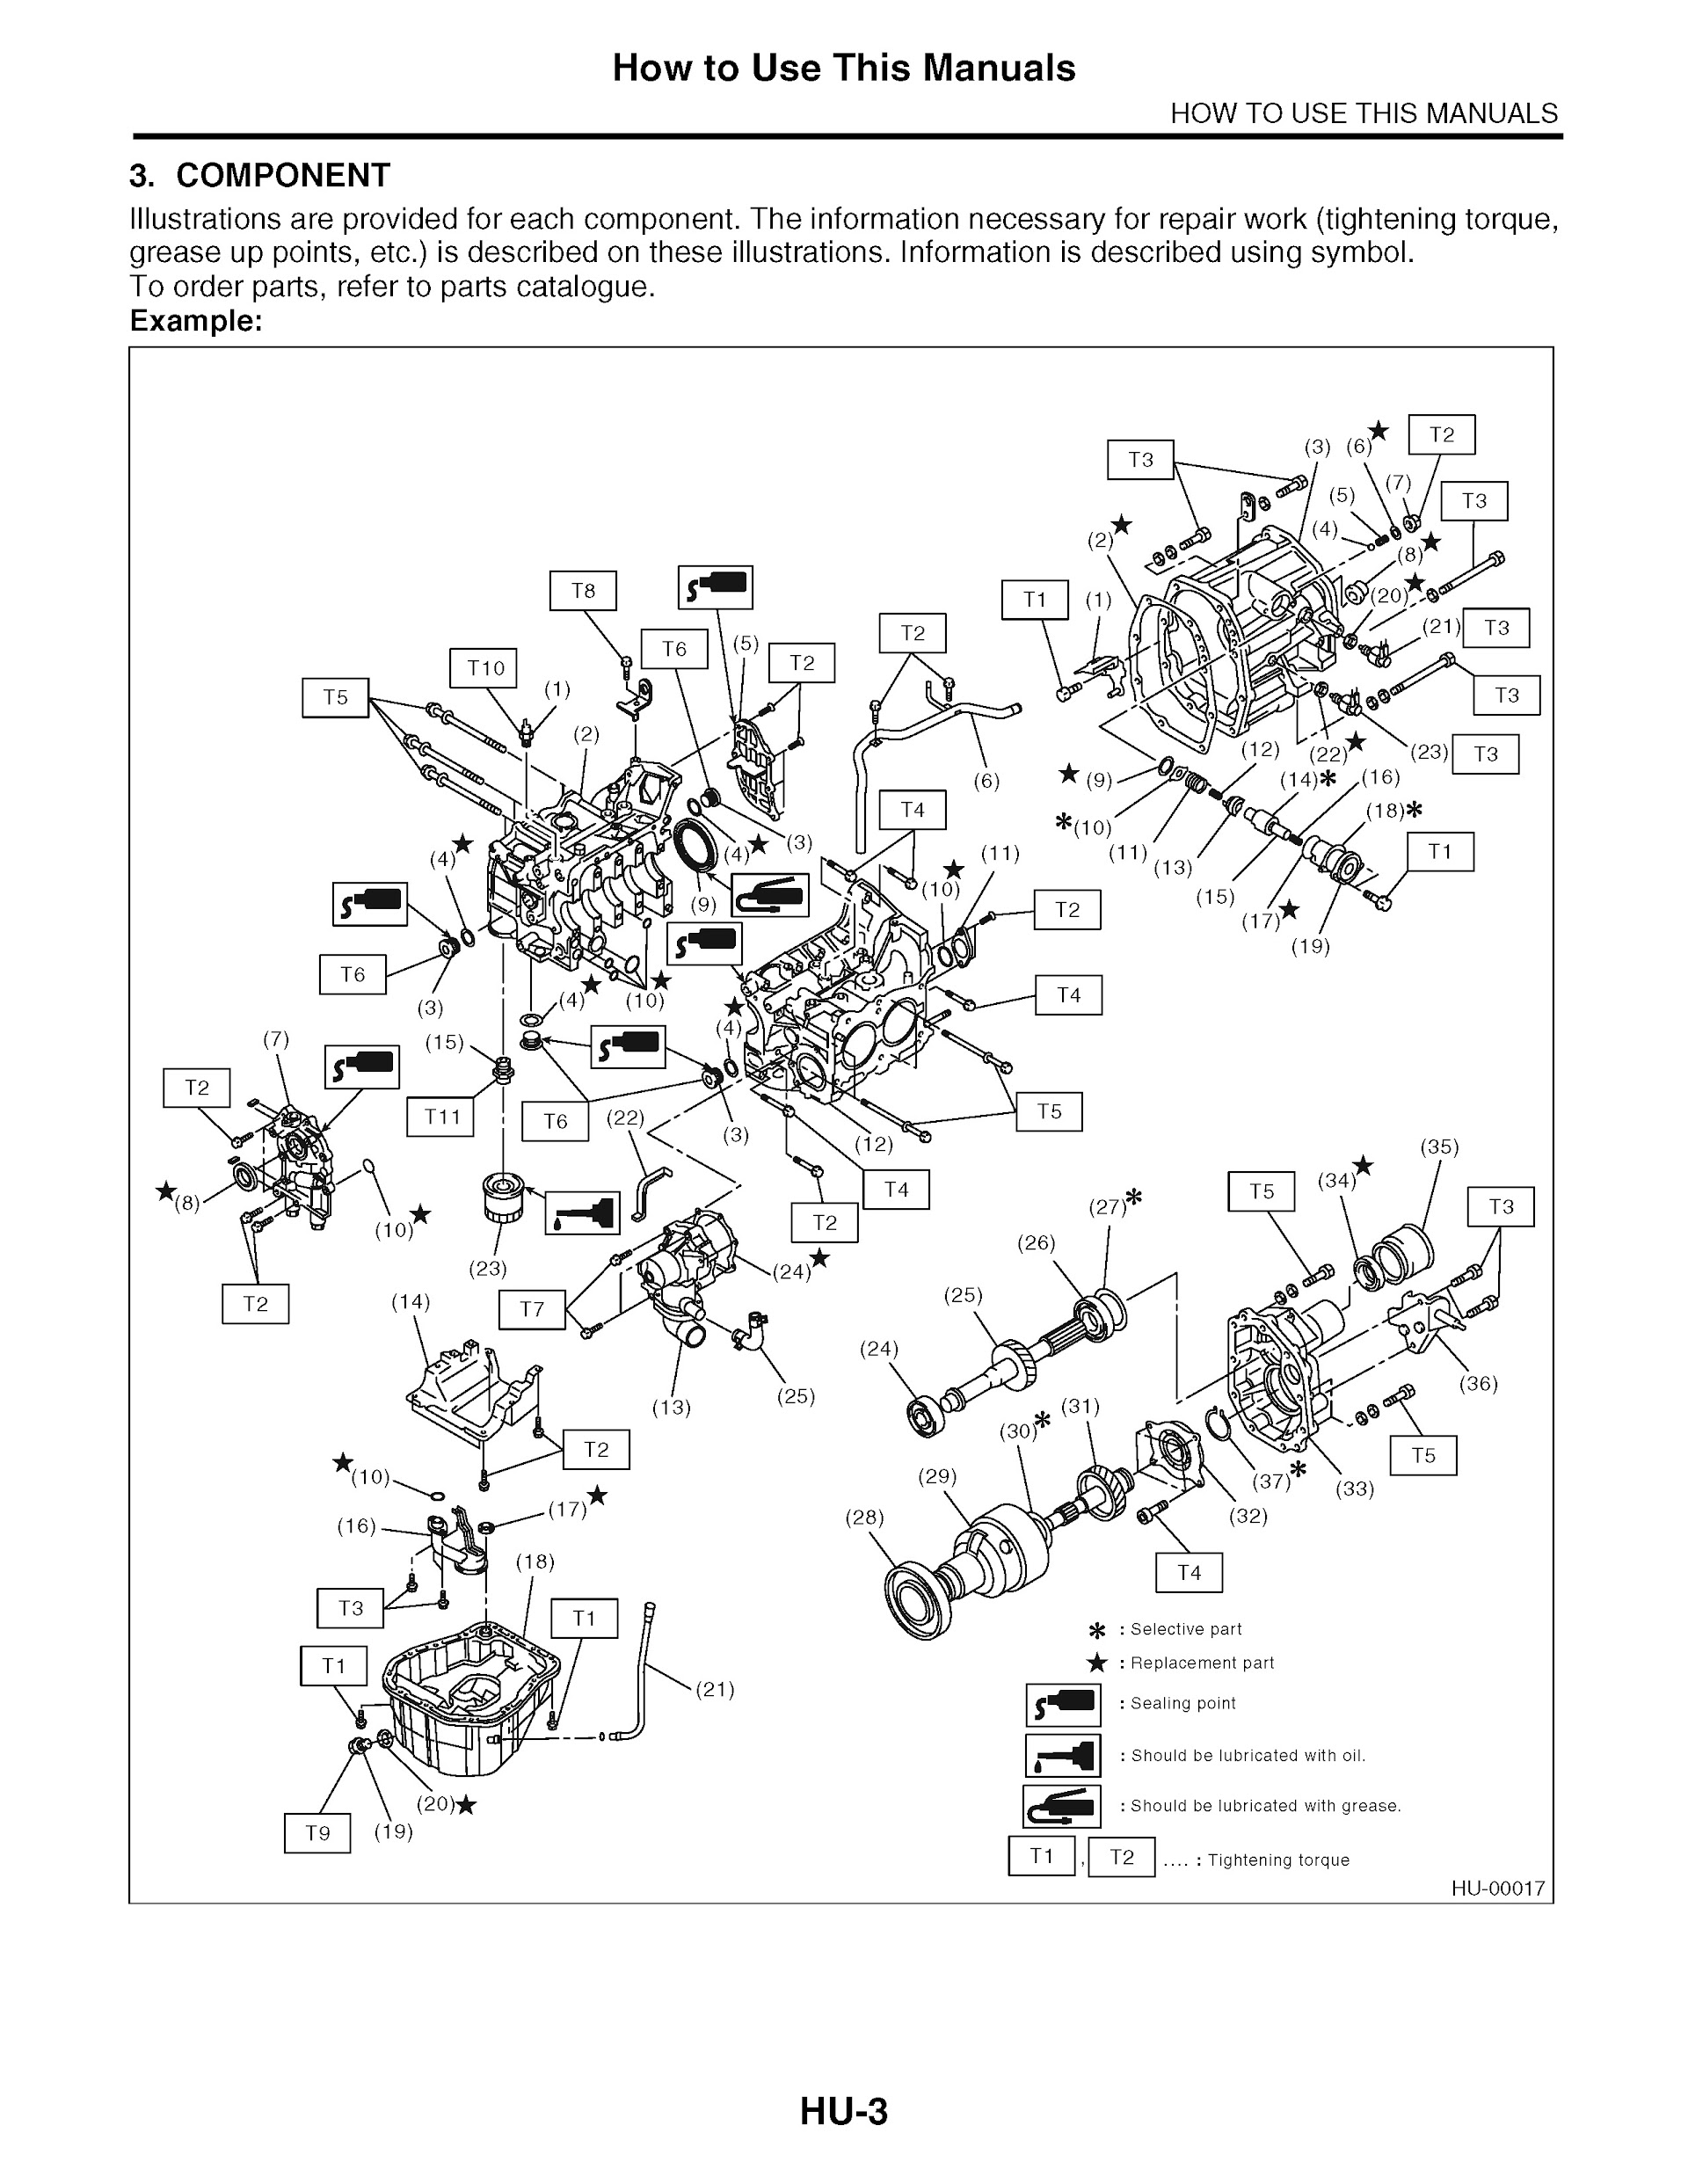 2012 Subaru Impreza Repair Manual, How To Use This Manual